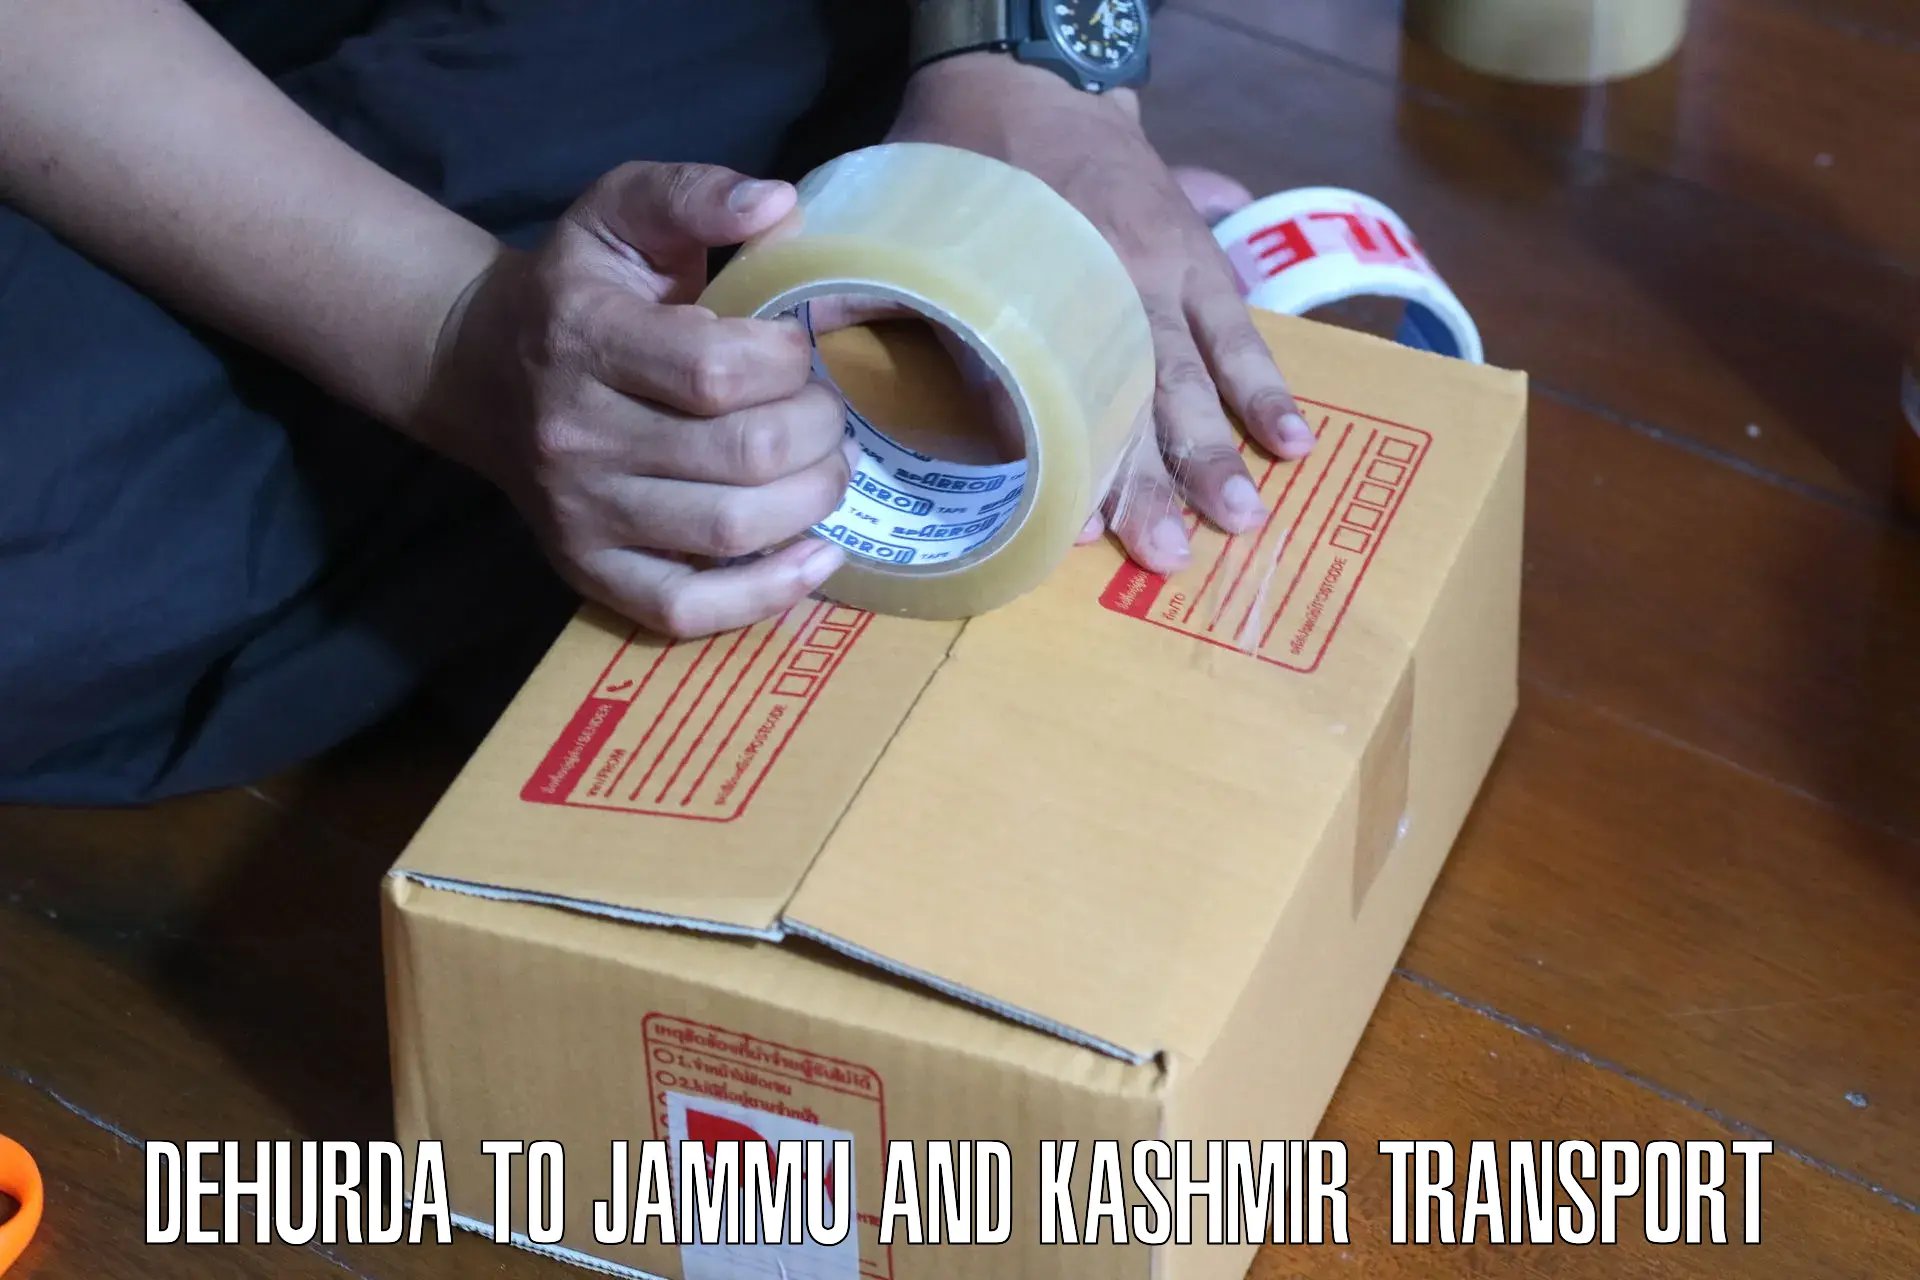 Sending bike to another city Dehurda to Jammu and Kashmir